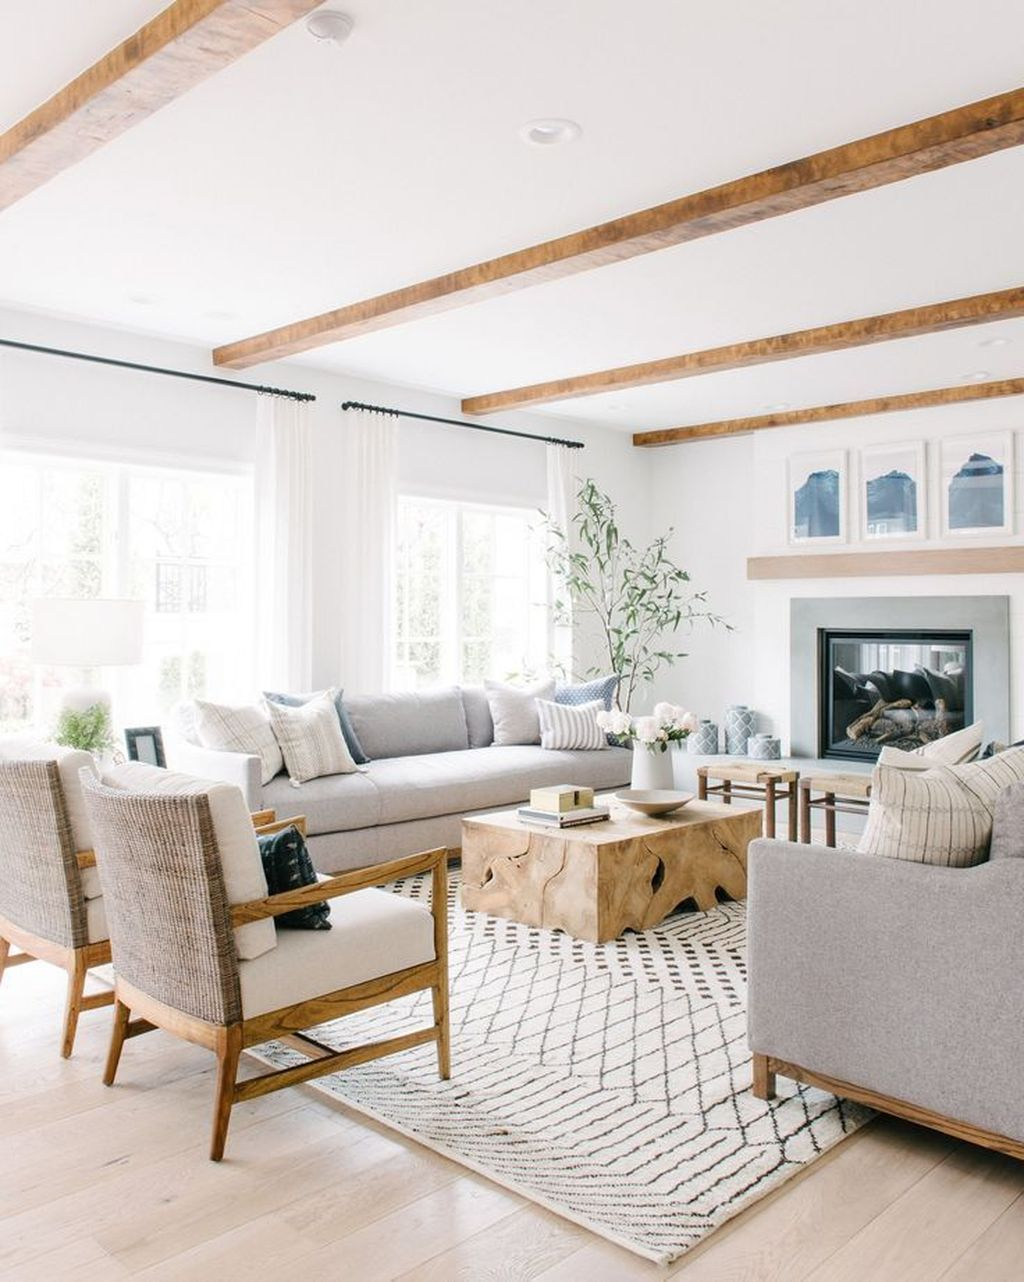 Excellent Furniture Design Ideas For Your Living Room 14